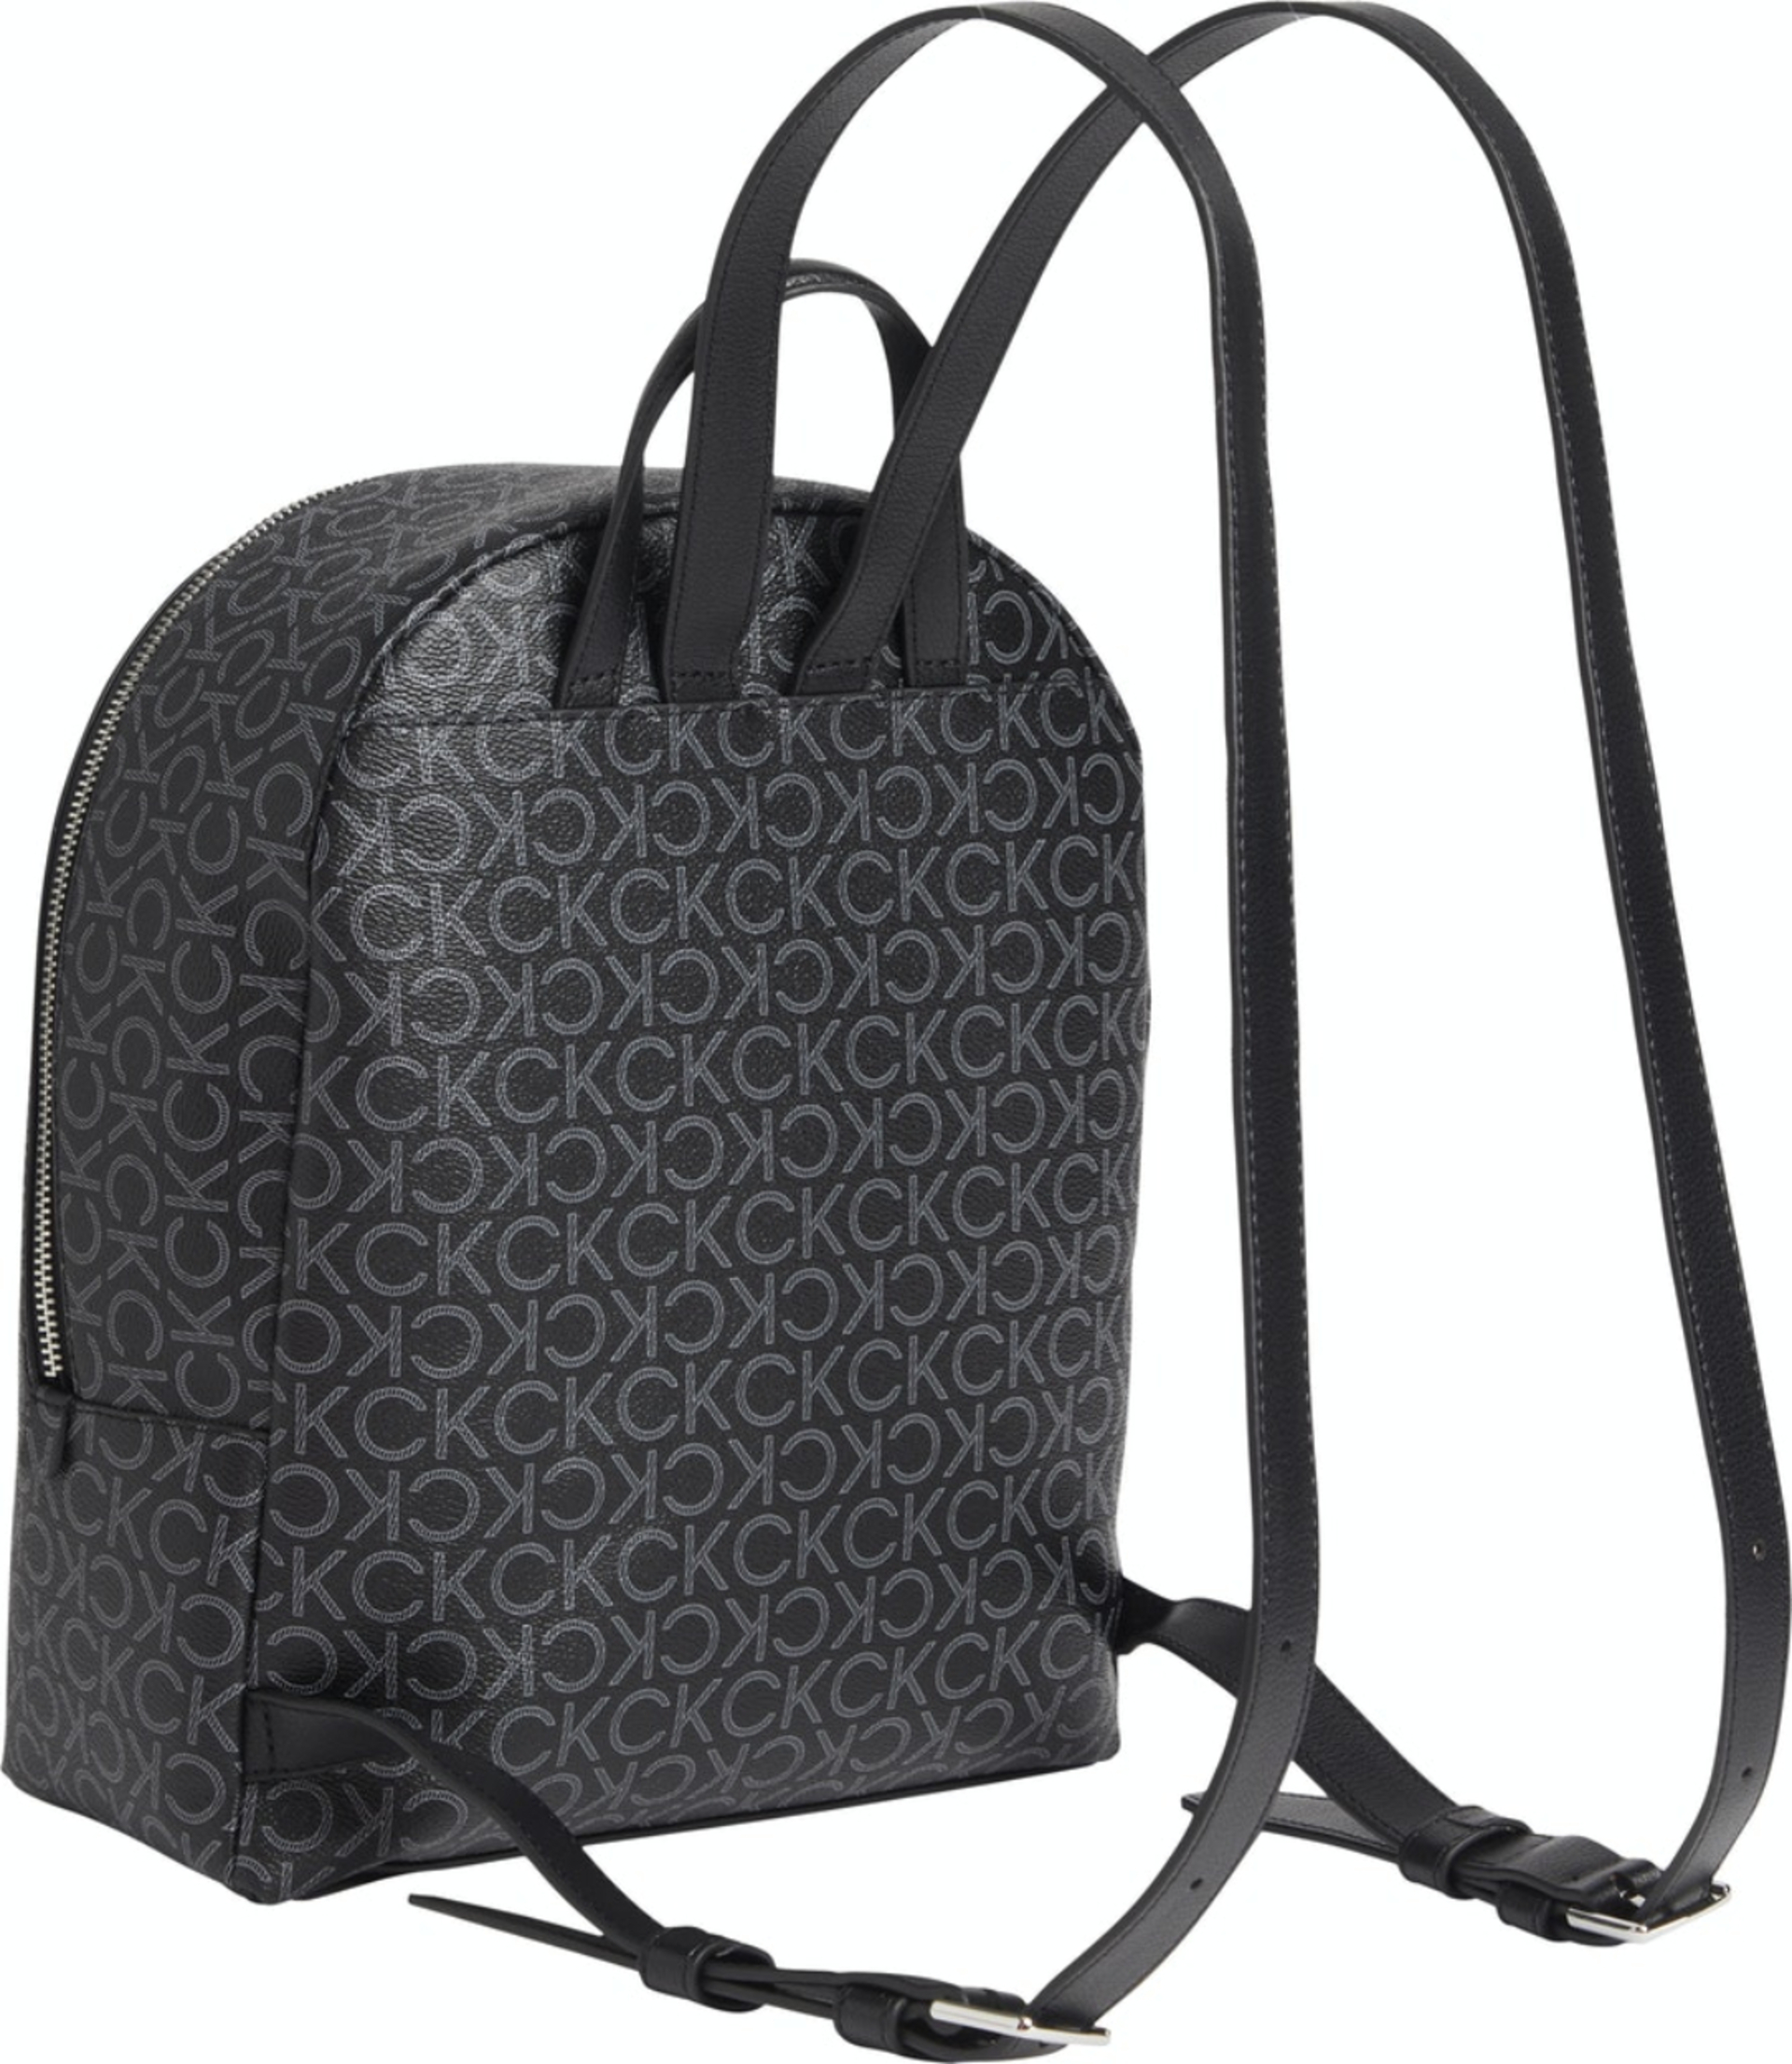 Calvin Klein dámský černý batoh - OS (0GJ)